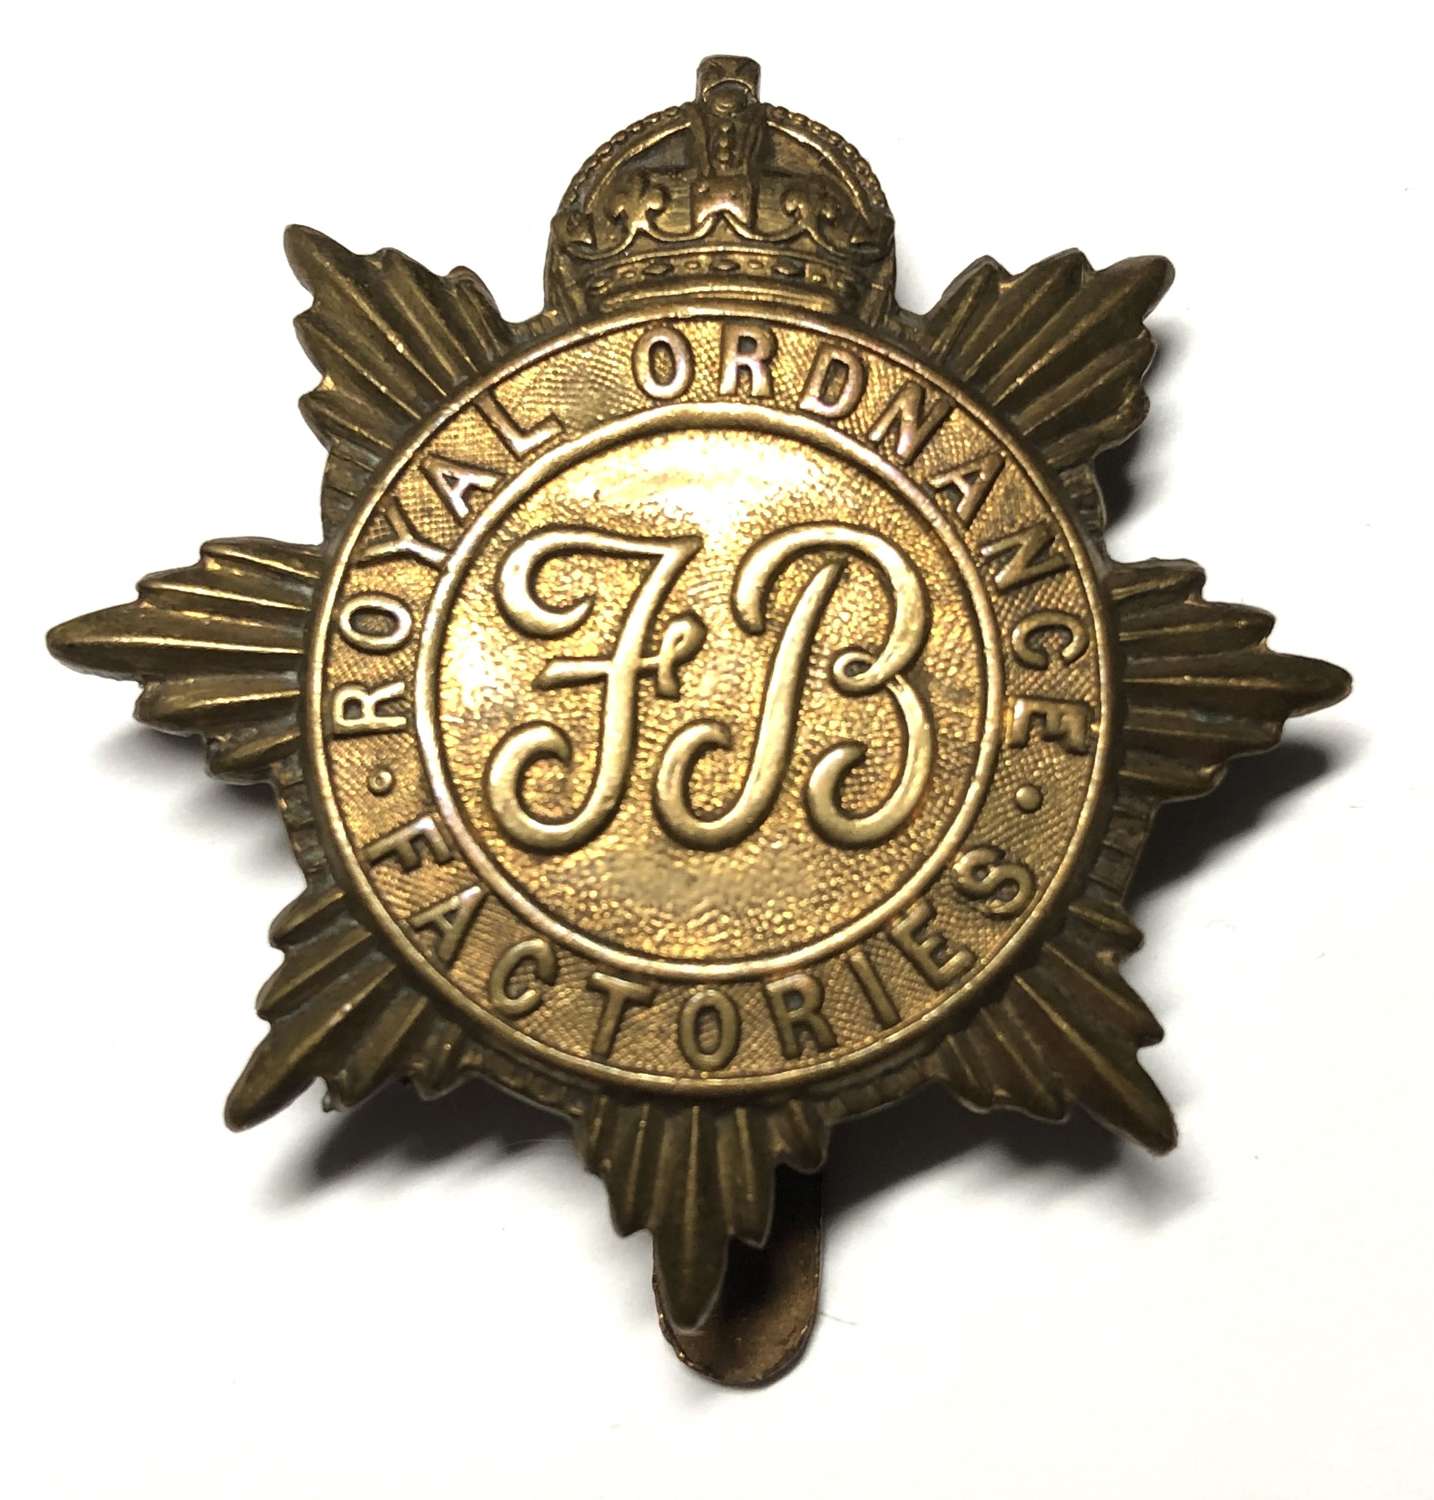 Royal Ordnance Factories Fire Briagade WW1 era cap badge